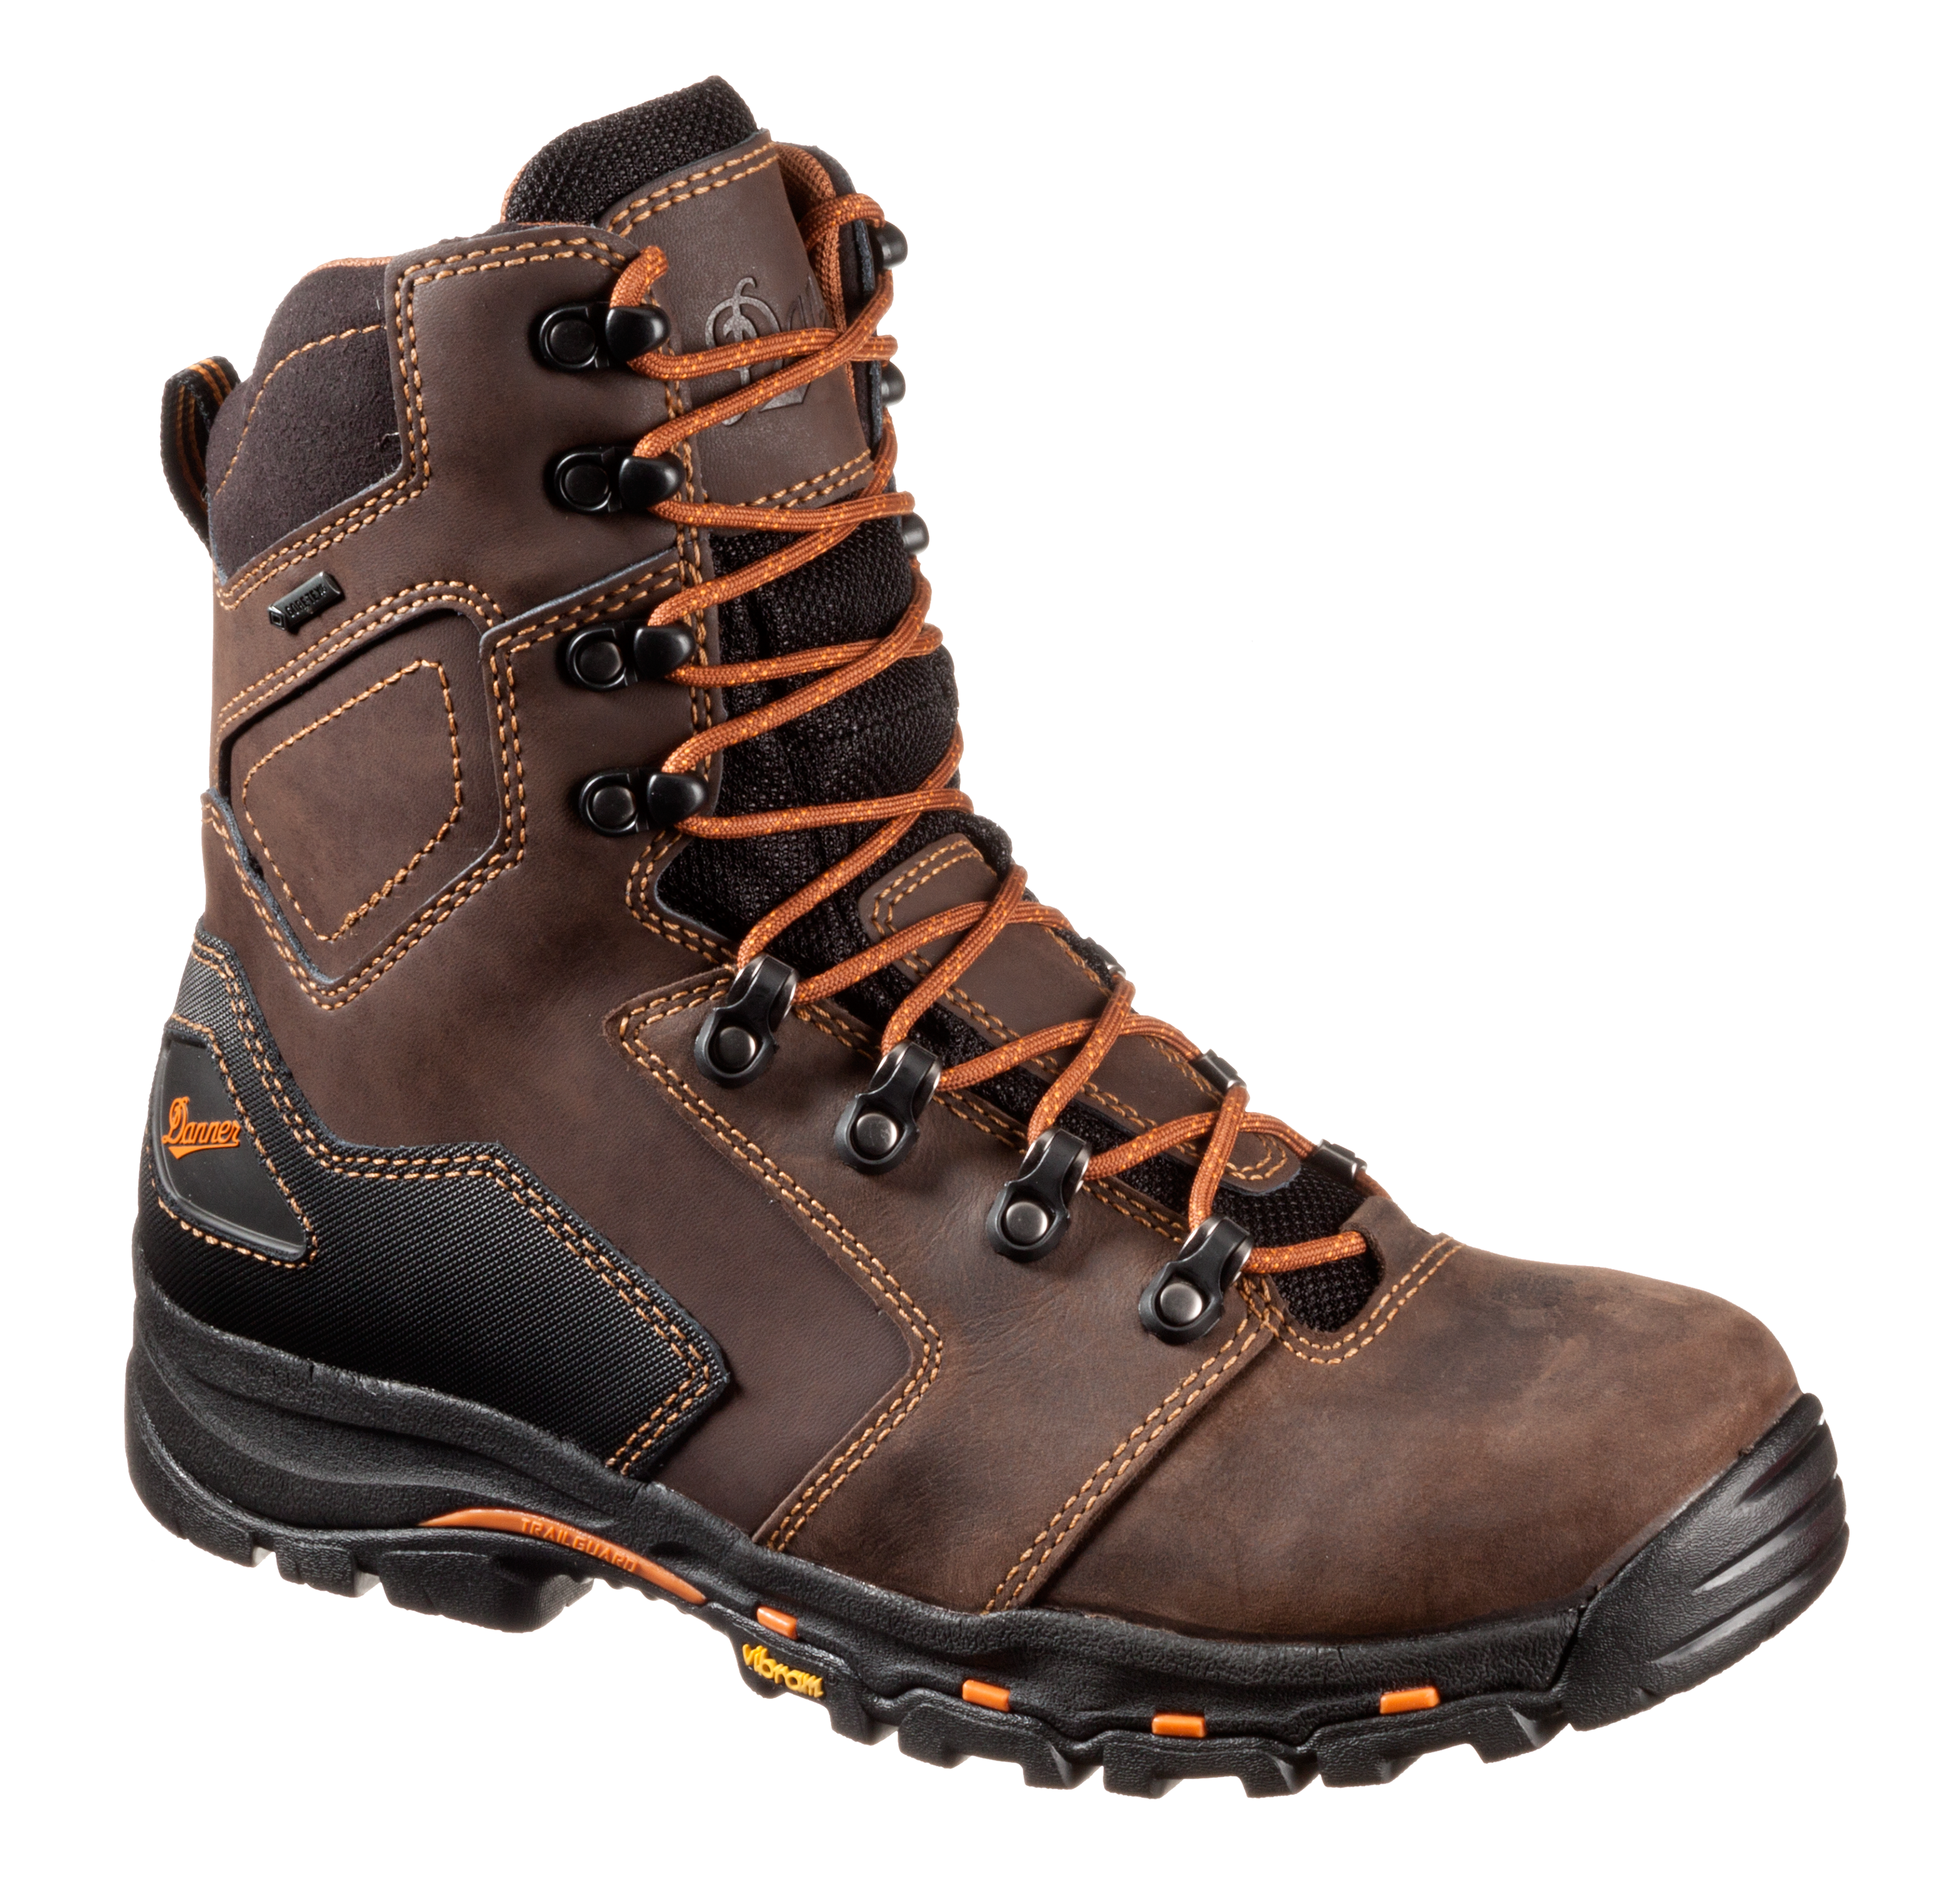 Danner Vicious GORE-TEX Work Boots for Men - Brown - 10.5 M